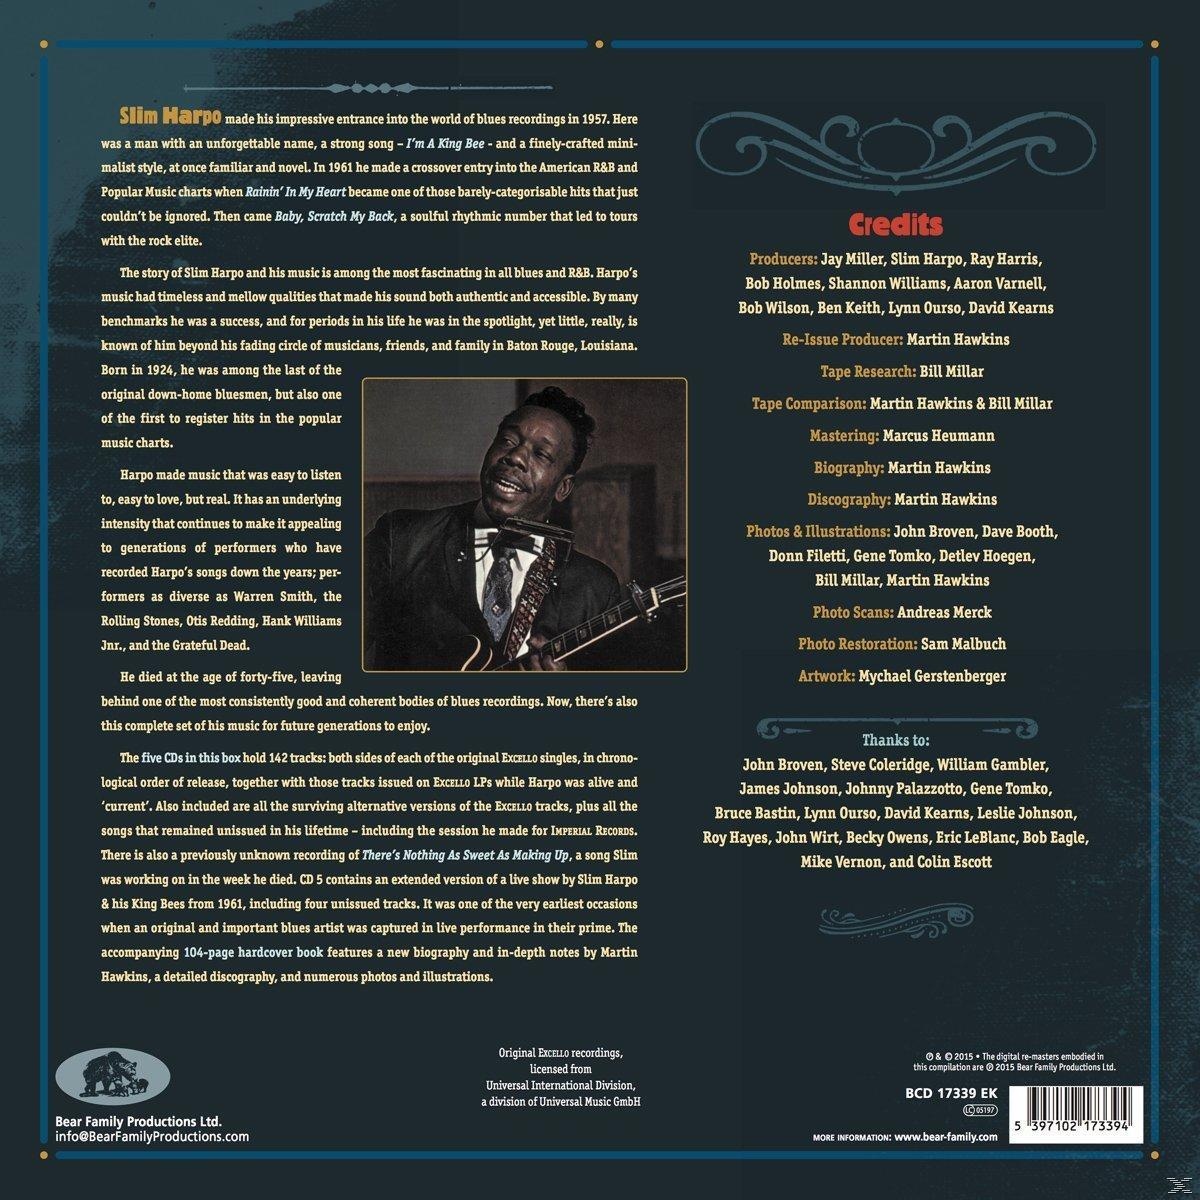 (CD) Complete Blues-The - Buzzin\' - Slim The Harpo Harpo Slim 5-CD